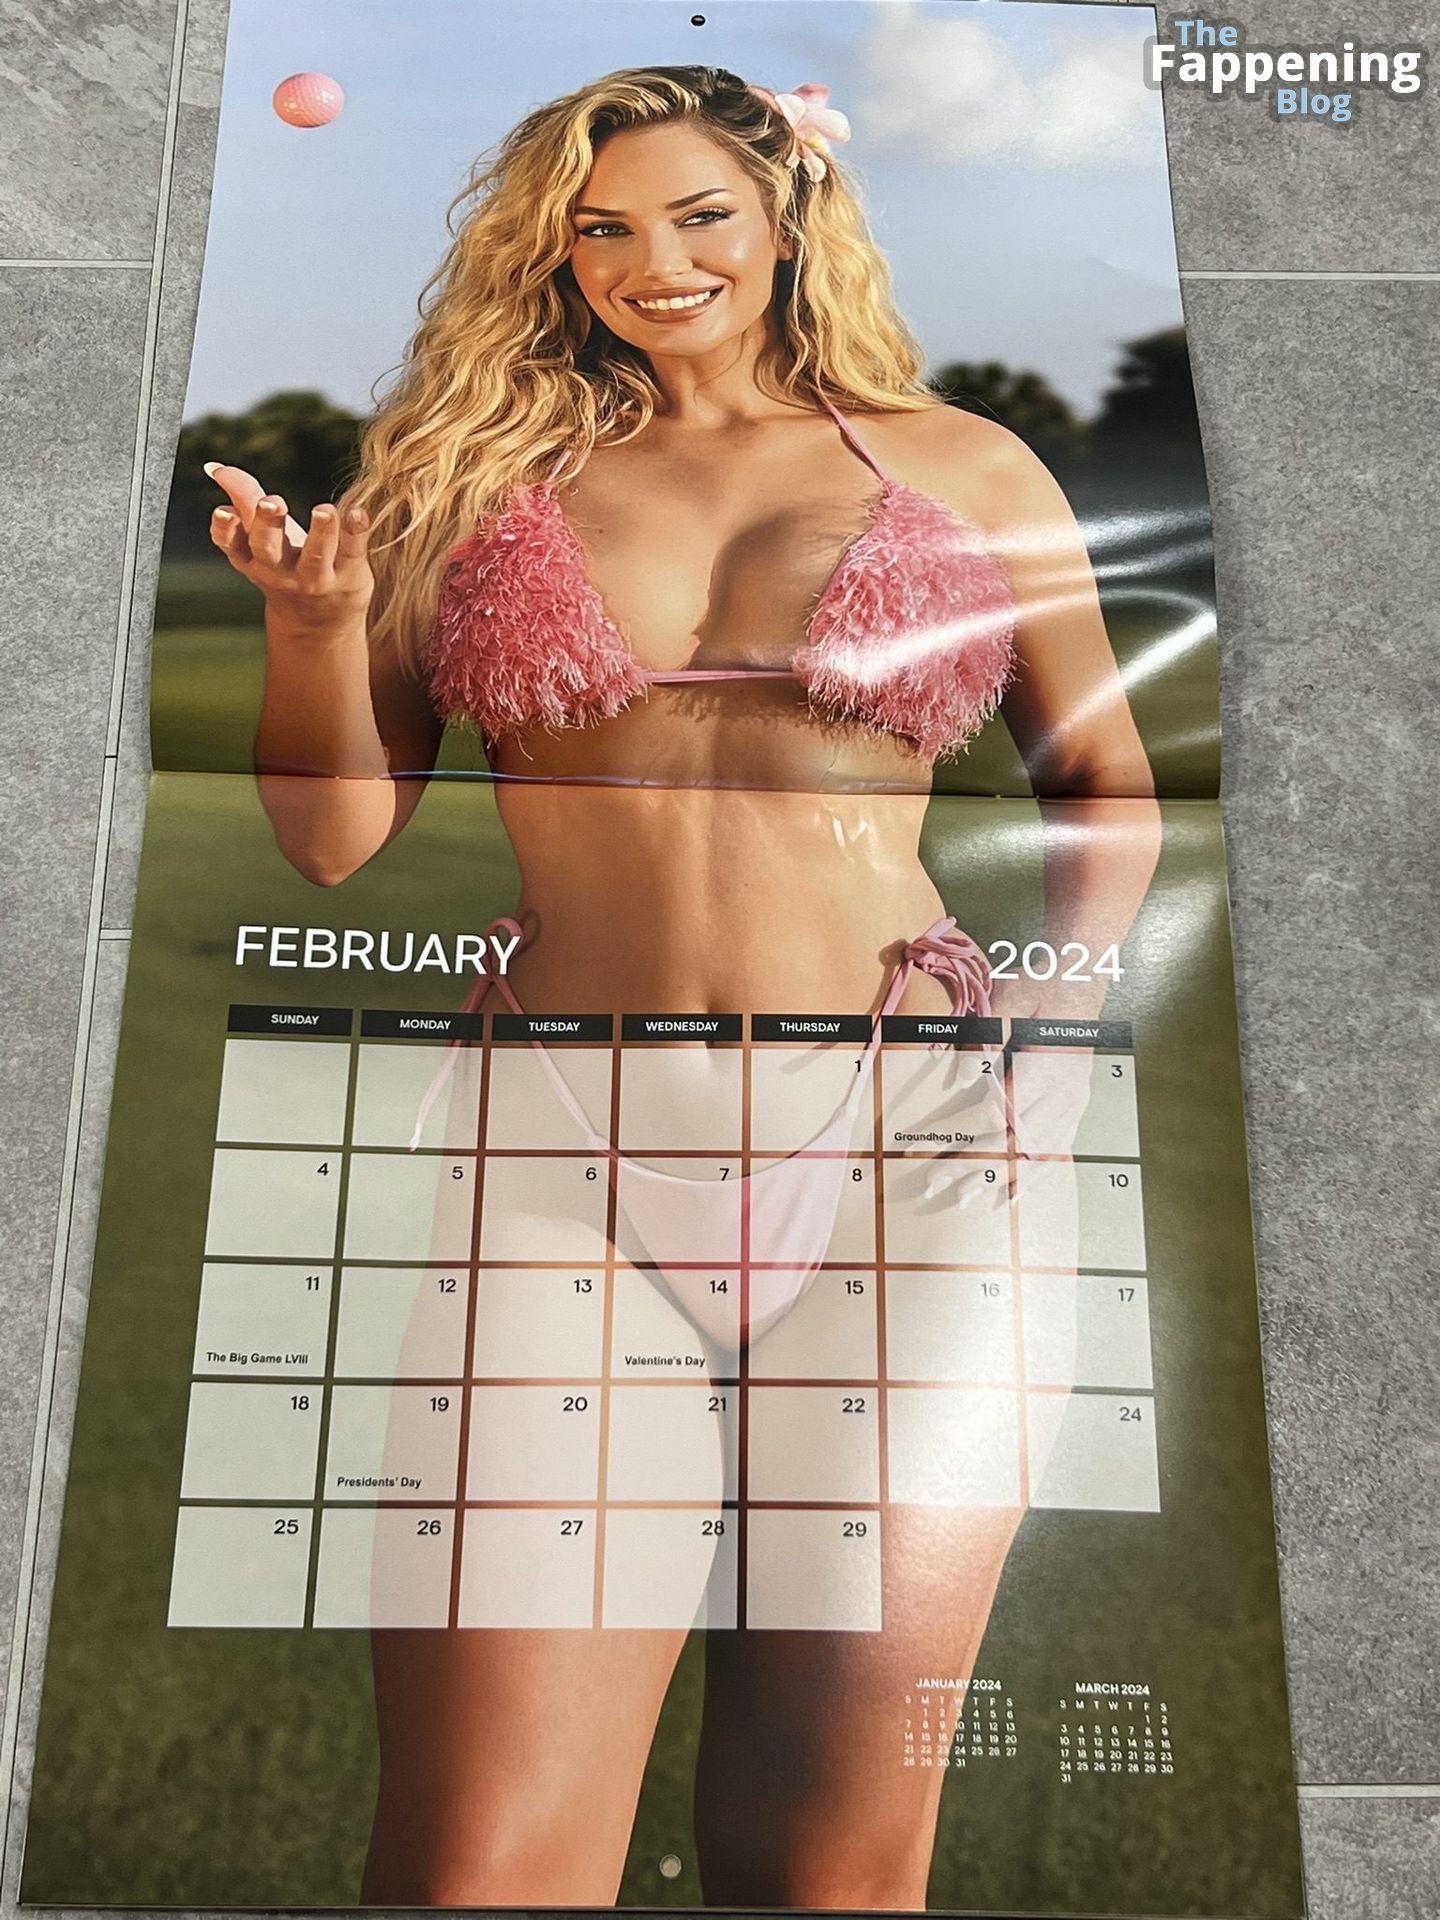 Paige-Spiranac-Calendar-Provocative-Boobs-Ass-4-thefappeningblog.com_.jpg